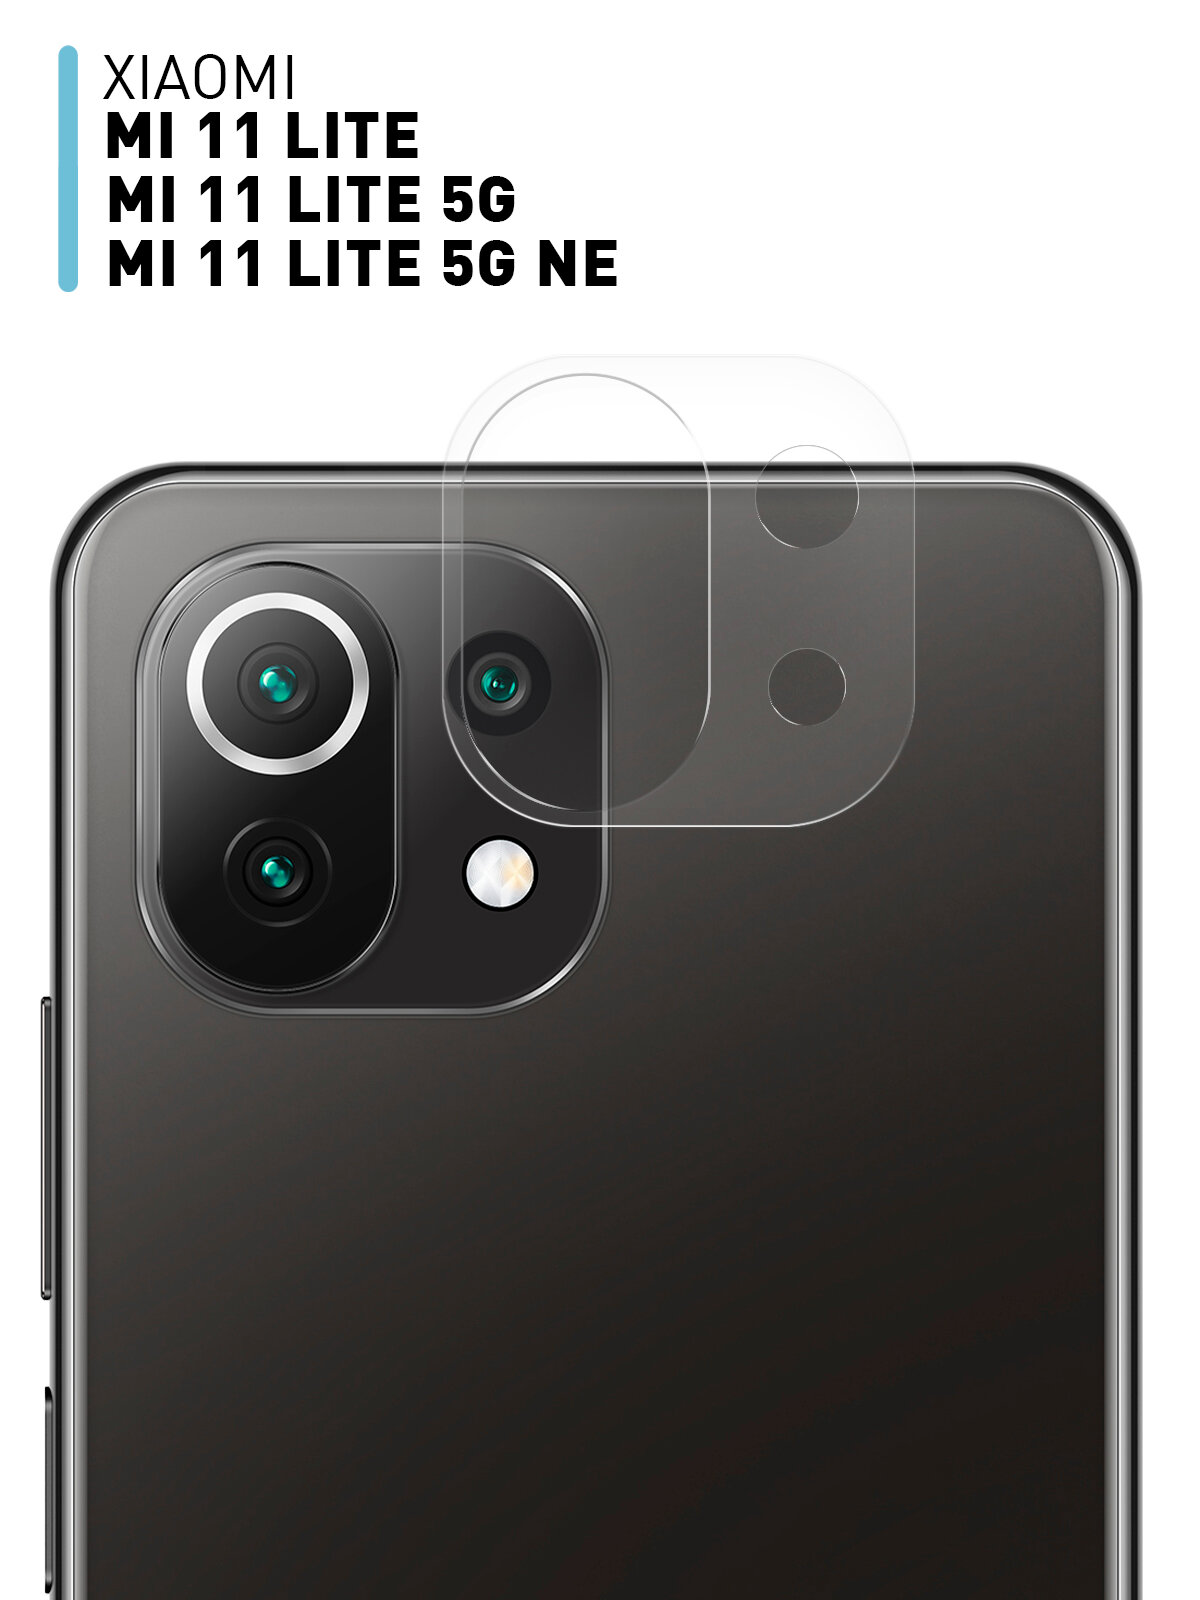 Защитное стекло на блок камер для Xiaomi Mi 11 Lite, 11 Lite 5G, 11 Lite 5G NE (Сяоми Ми 11 Лайт, Ми 11 Лайт 5Г, Не) противоударное, легко наклеить